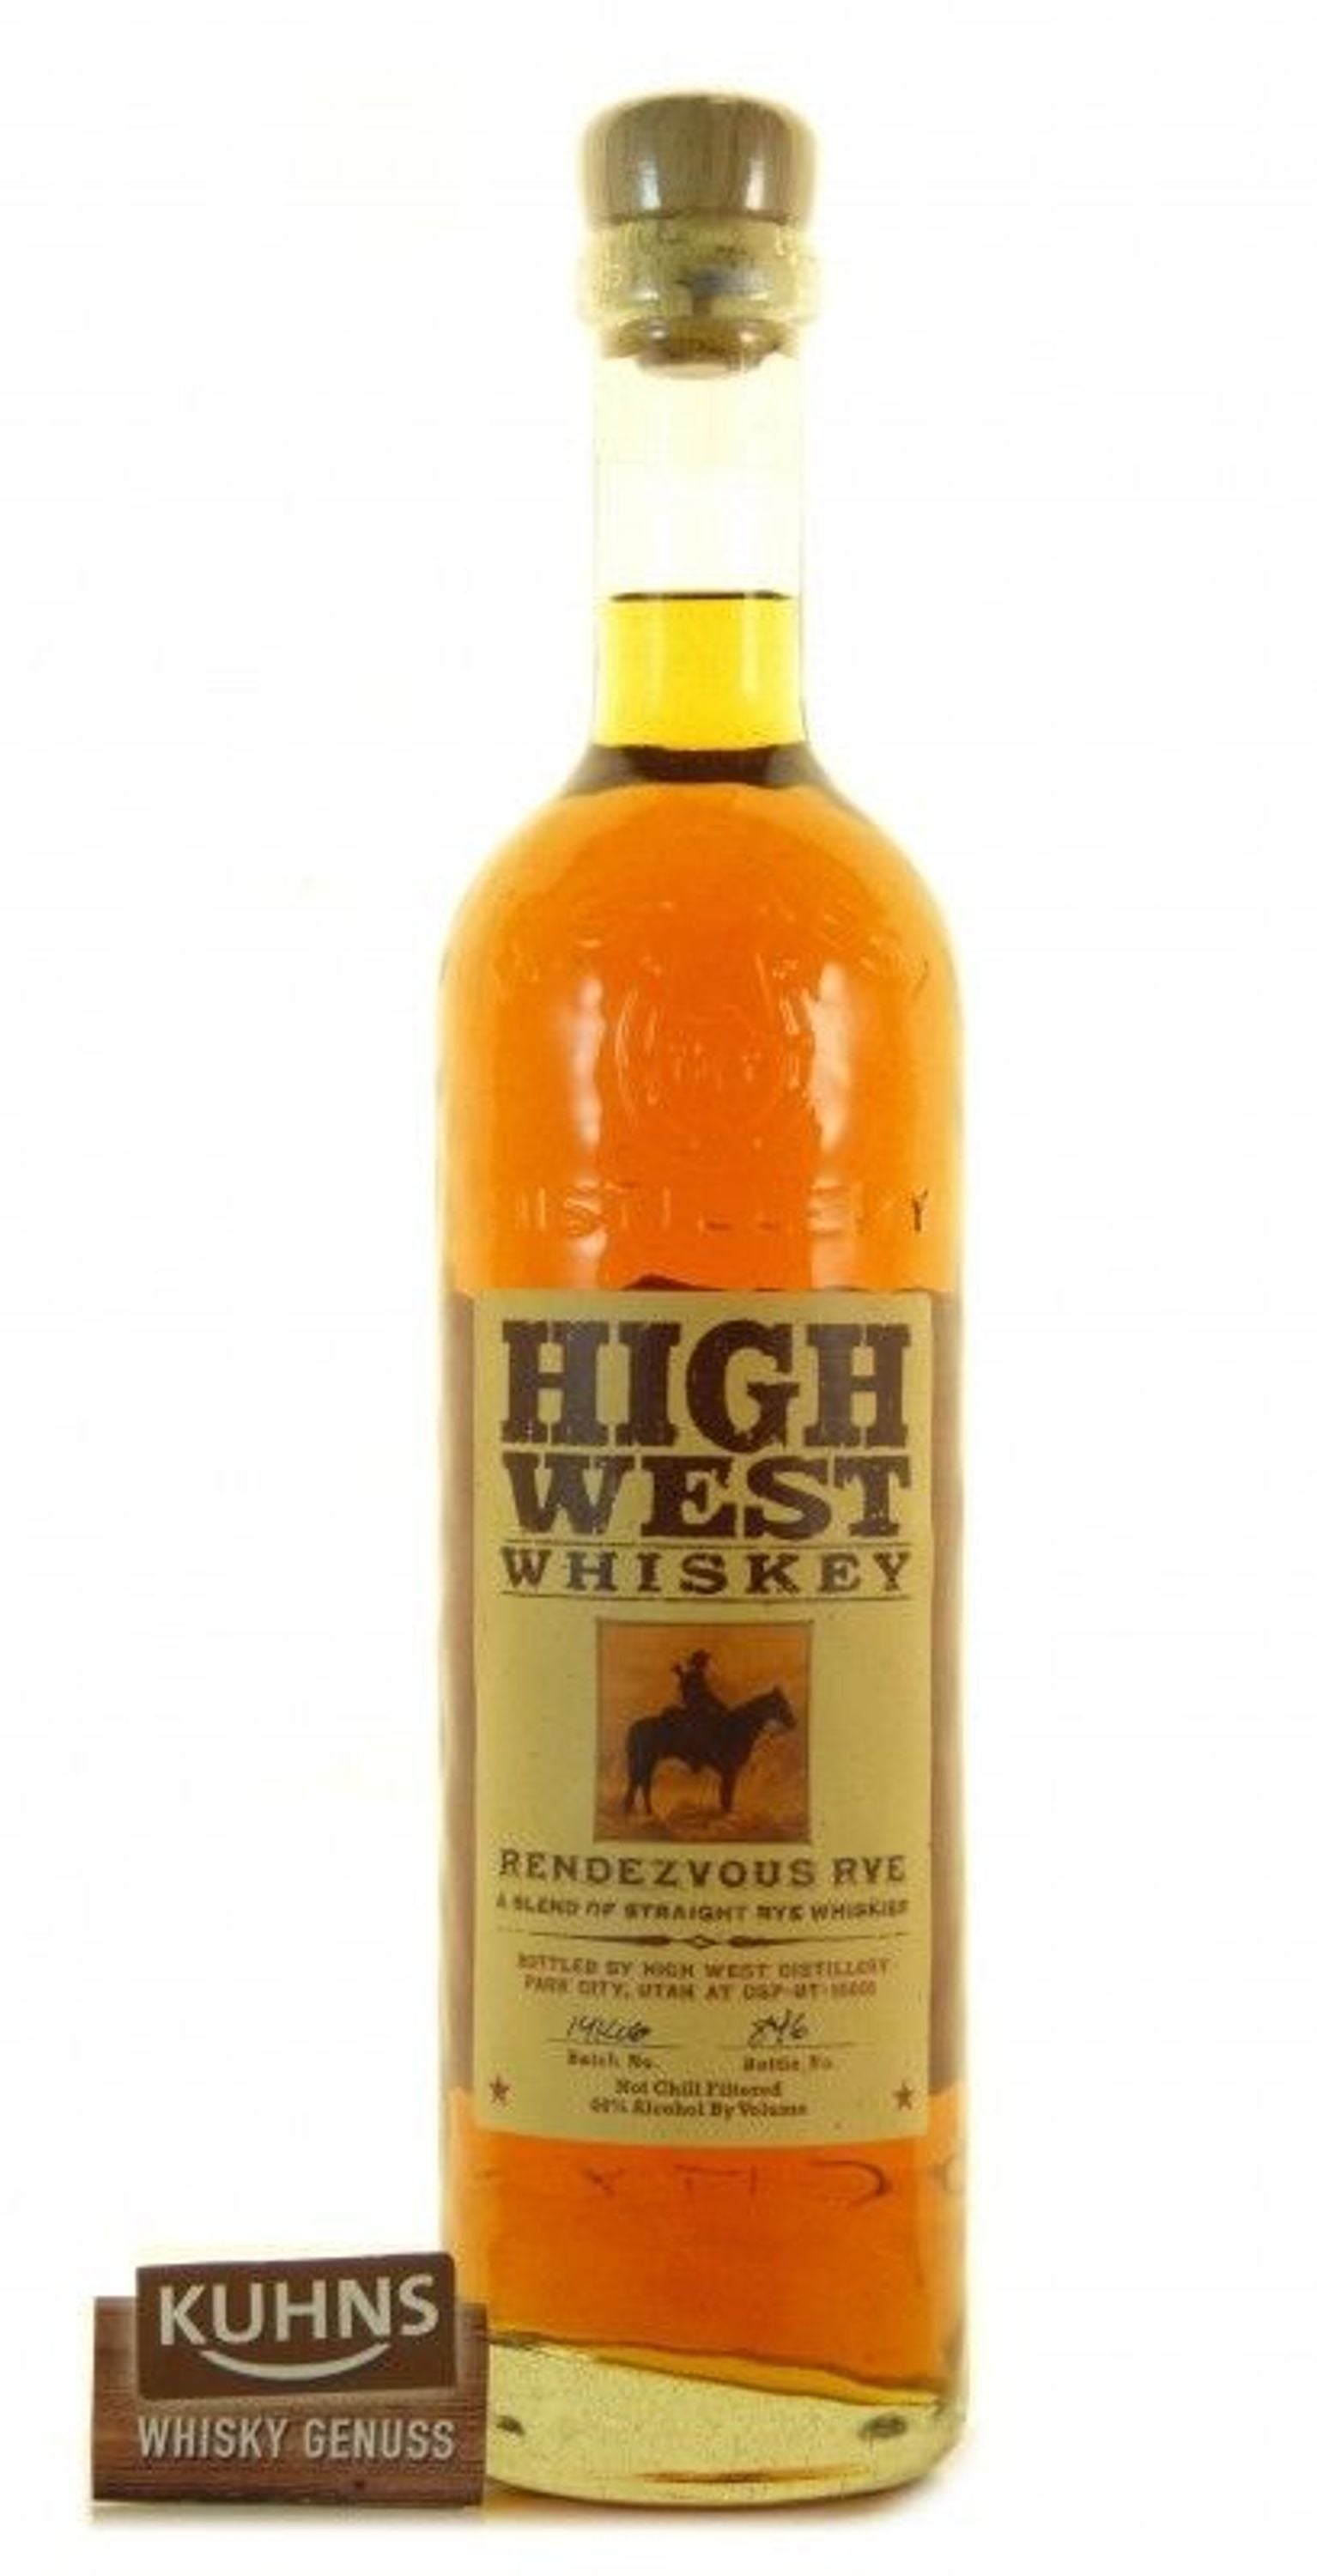 High West Rendezvous Rye Whisky 0,7l, alk. 46 % ABV, USA Ruisviski